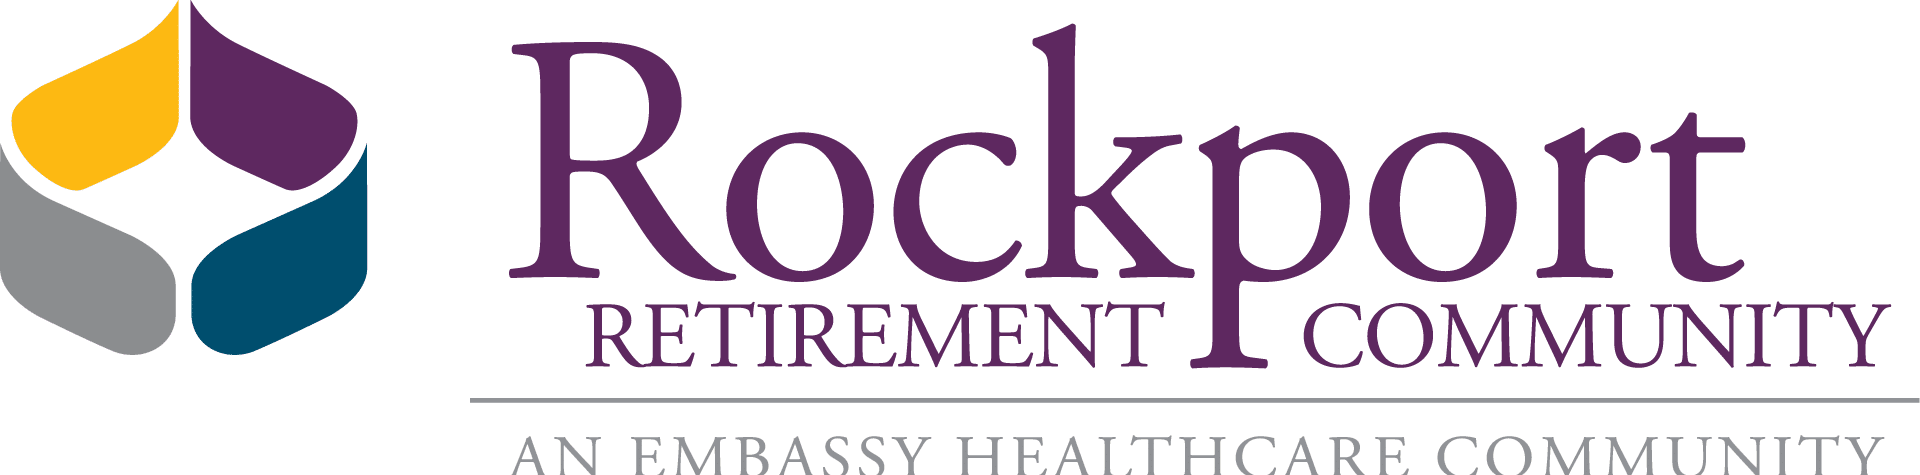 Retirement Community | Rocky River OH | Rockport